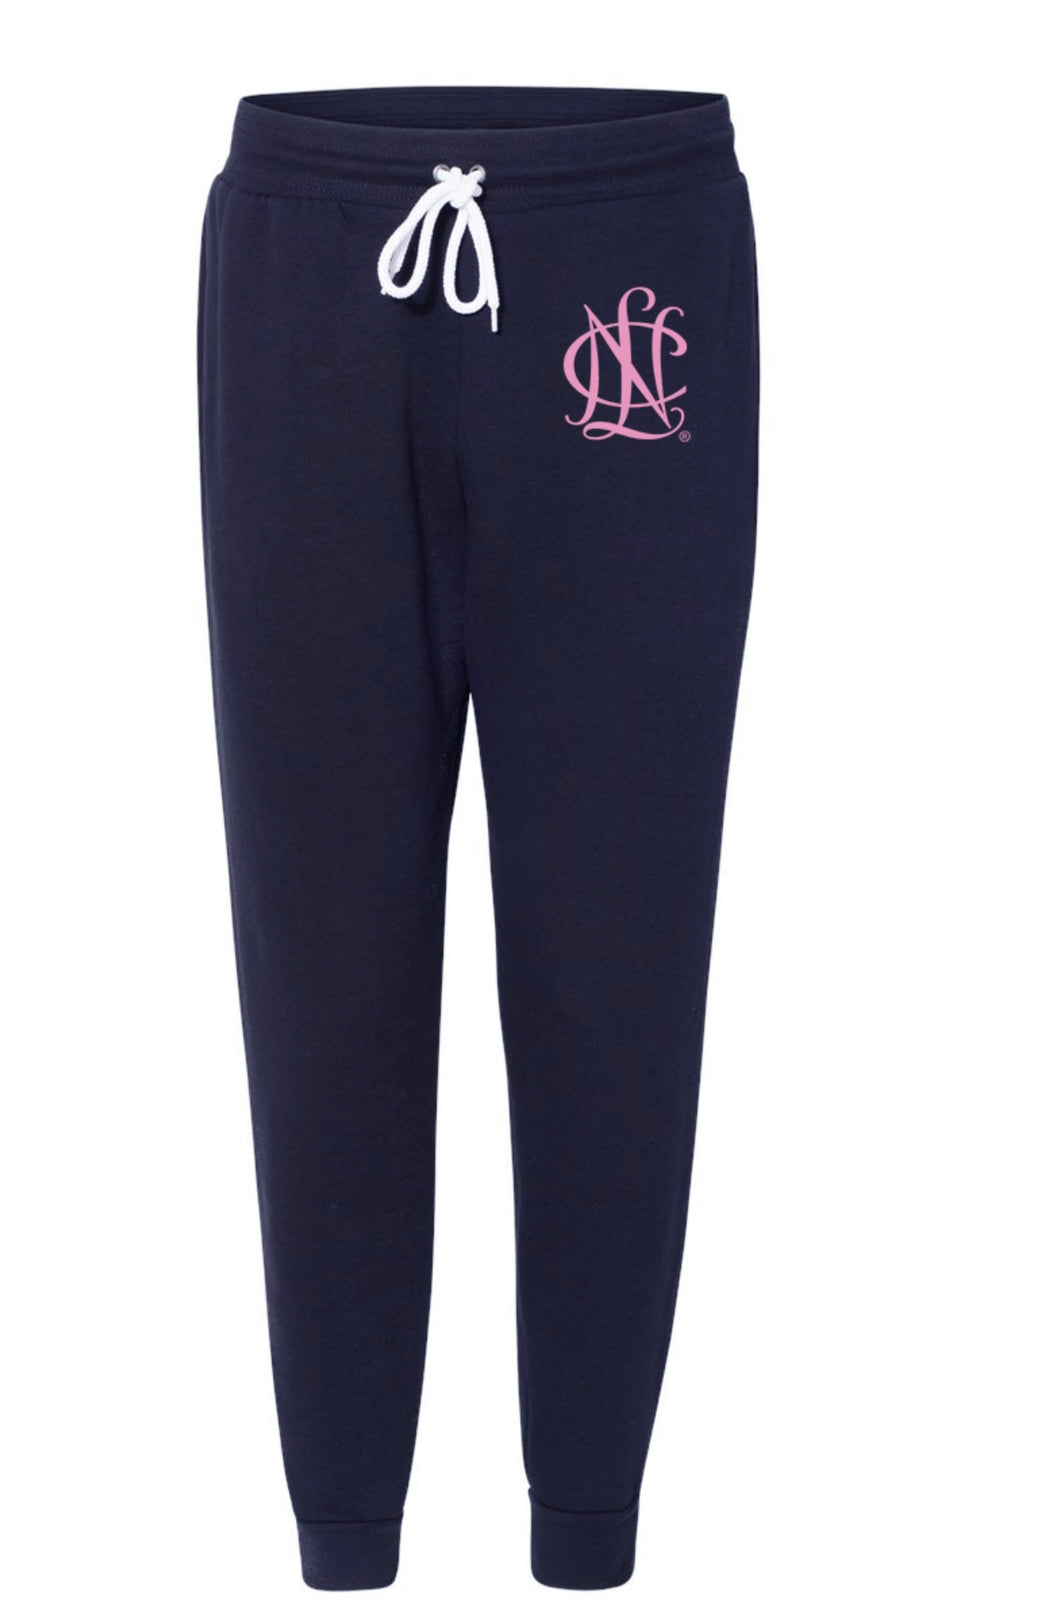 Pants - Jogger, Navy with Pink logo